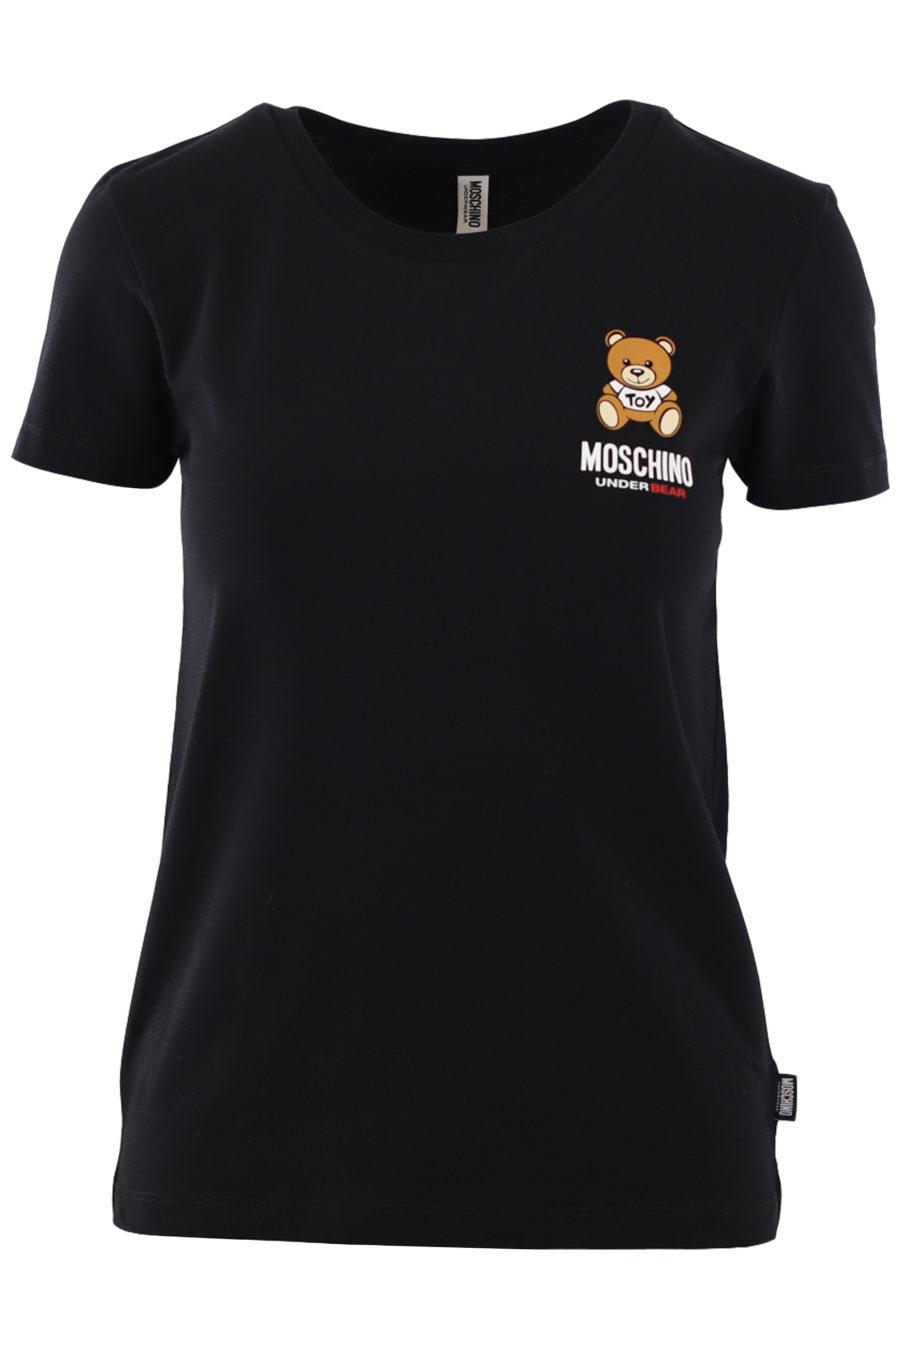 Camiseta negra con logo oso "underbear" - IMG 0830